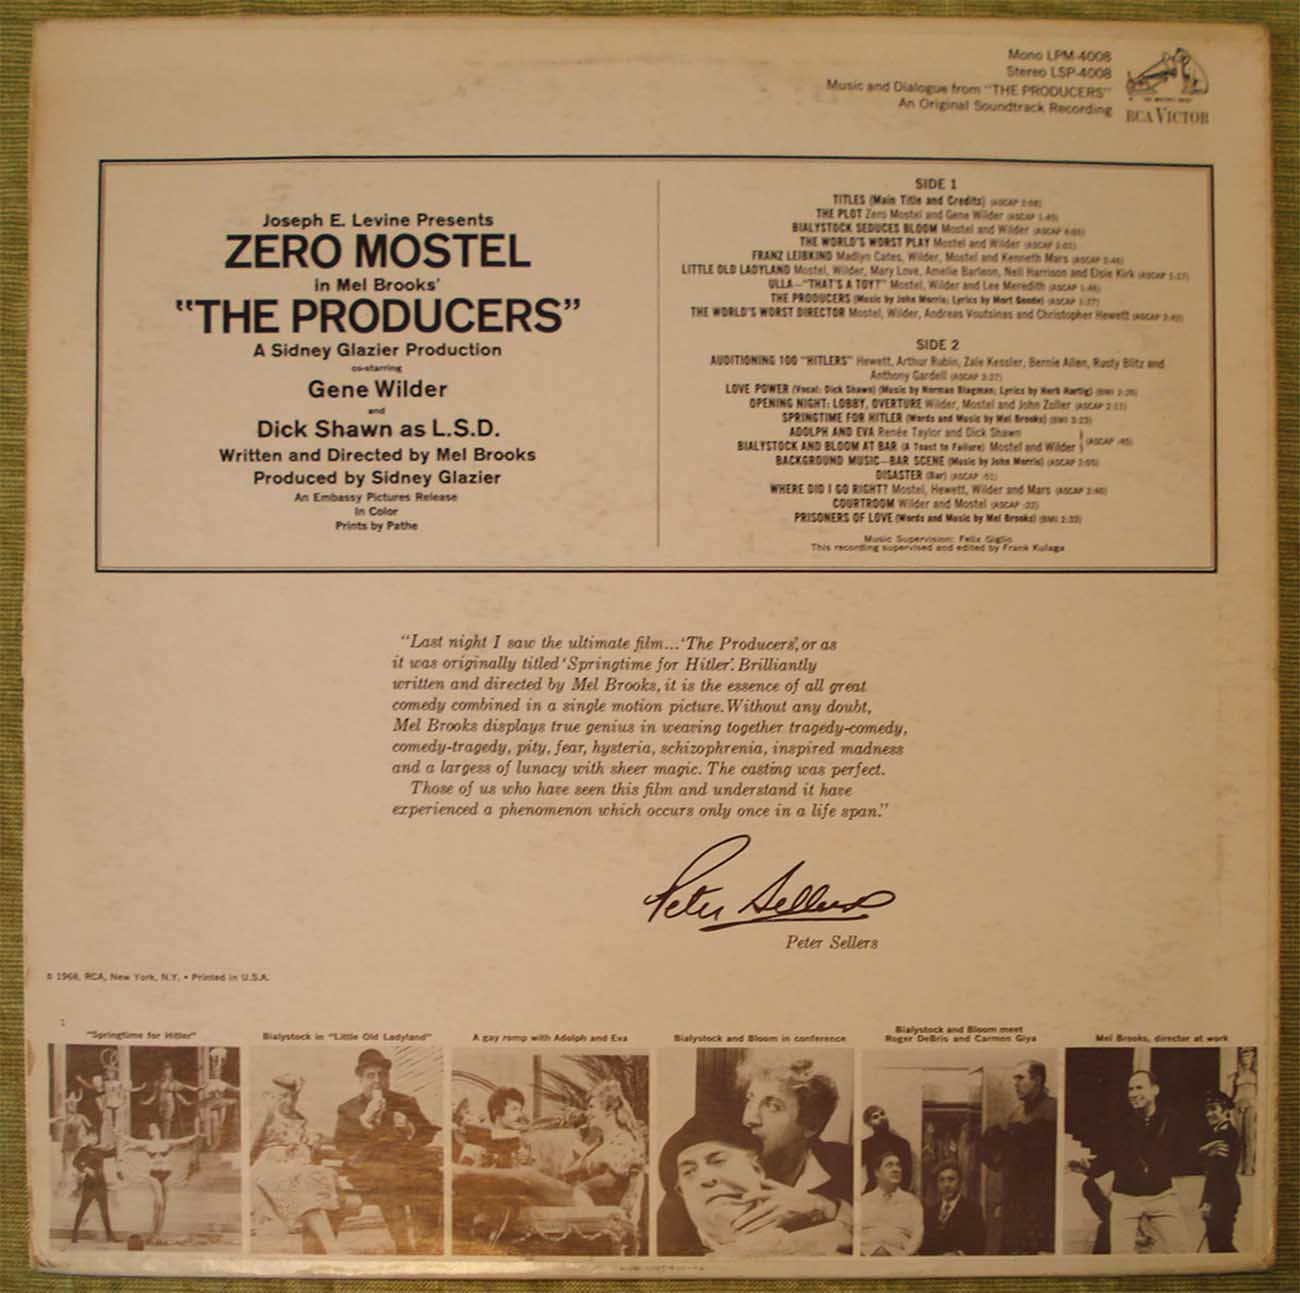 The Producers - The Original Soundtrack Recording (1968) Vinyl LP 33rpm LSP-4008